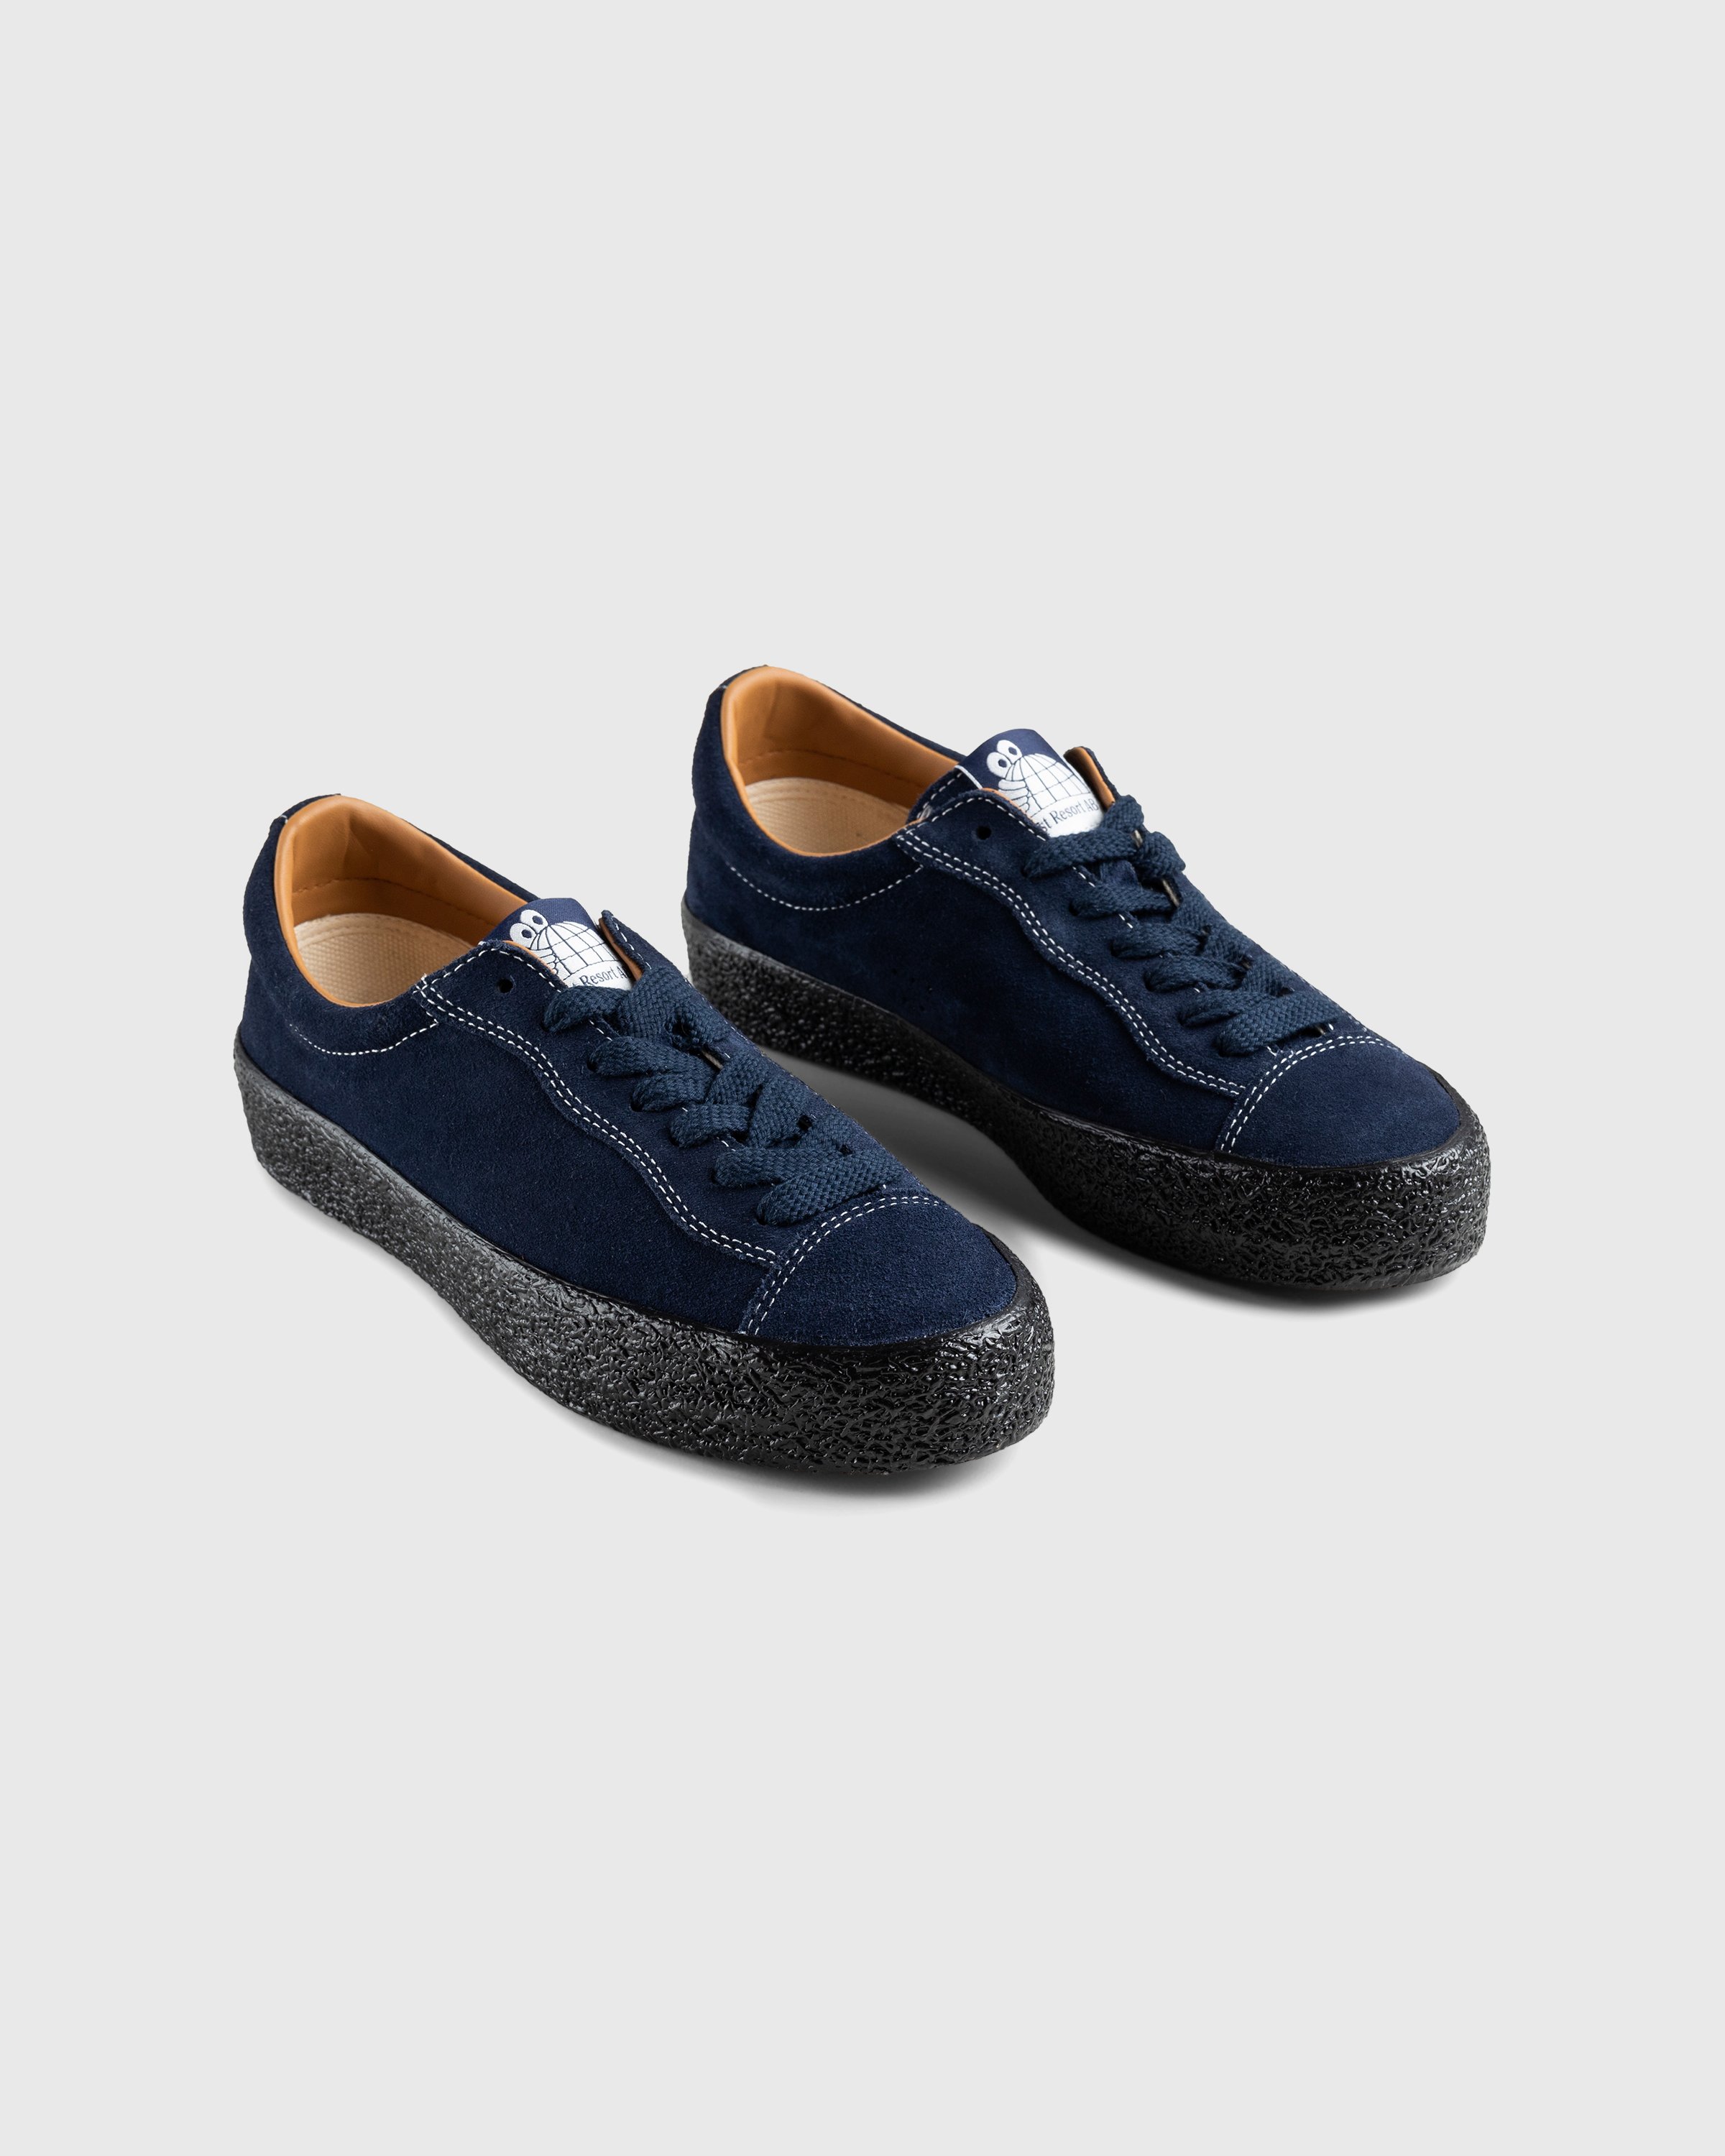 Last Resort AB - VM003-Suede LO Navy/Black - Footwear - Blue - Image 3